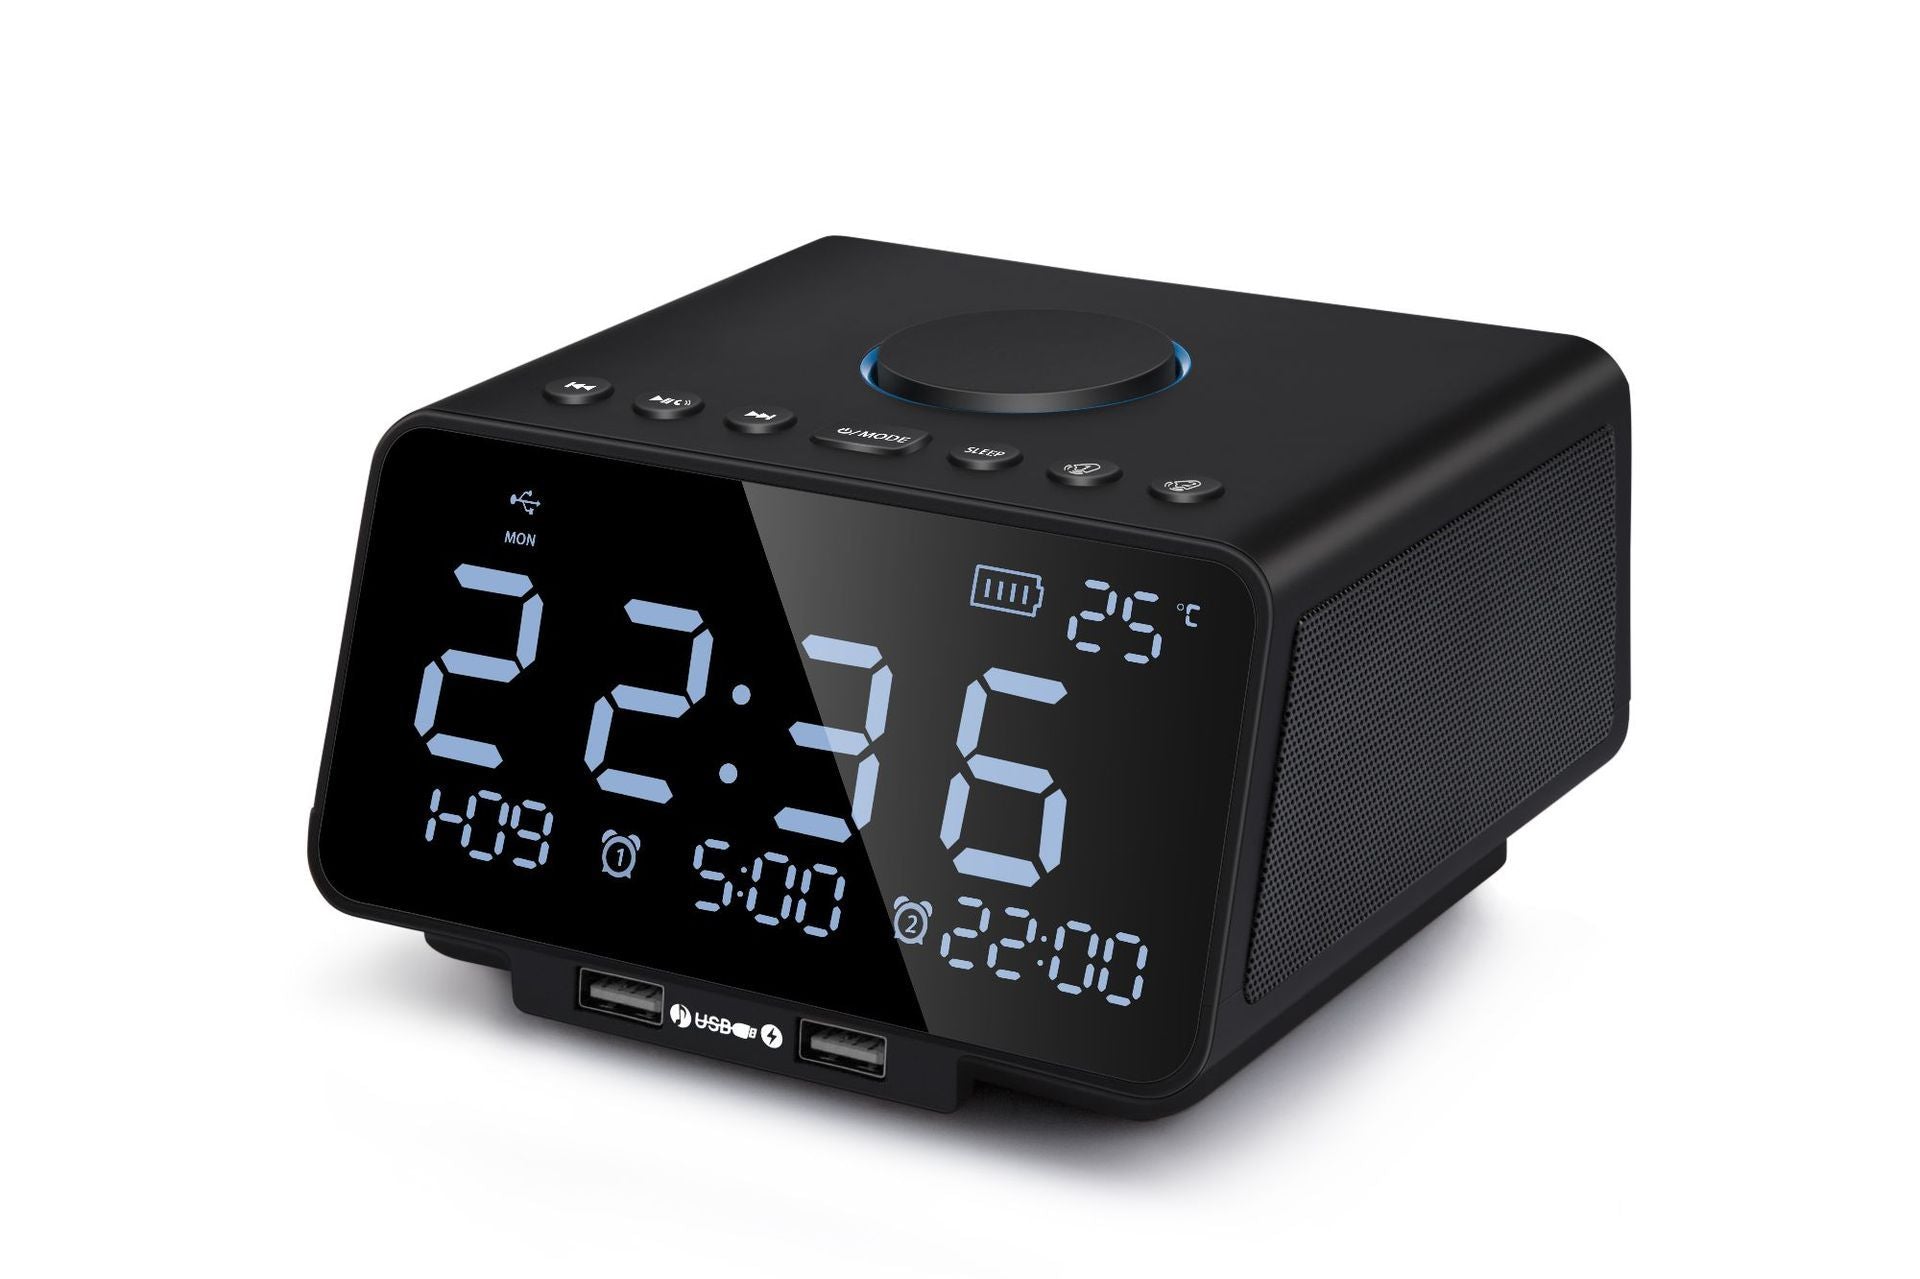 Wireless alarm clock speaker